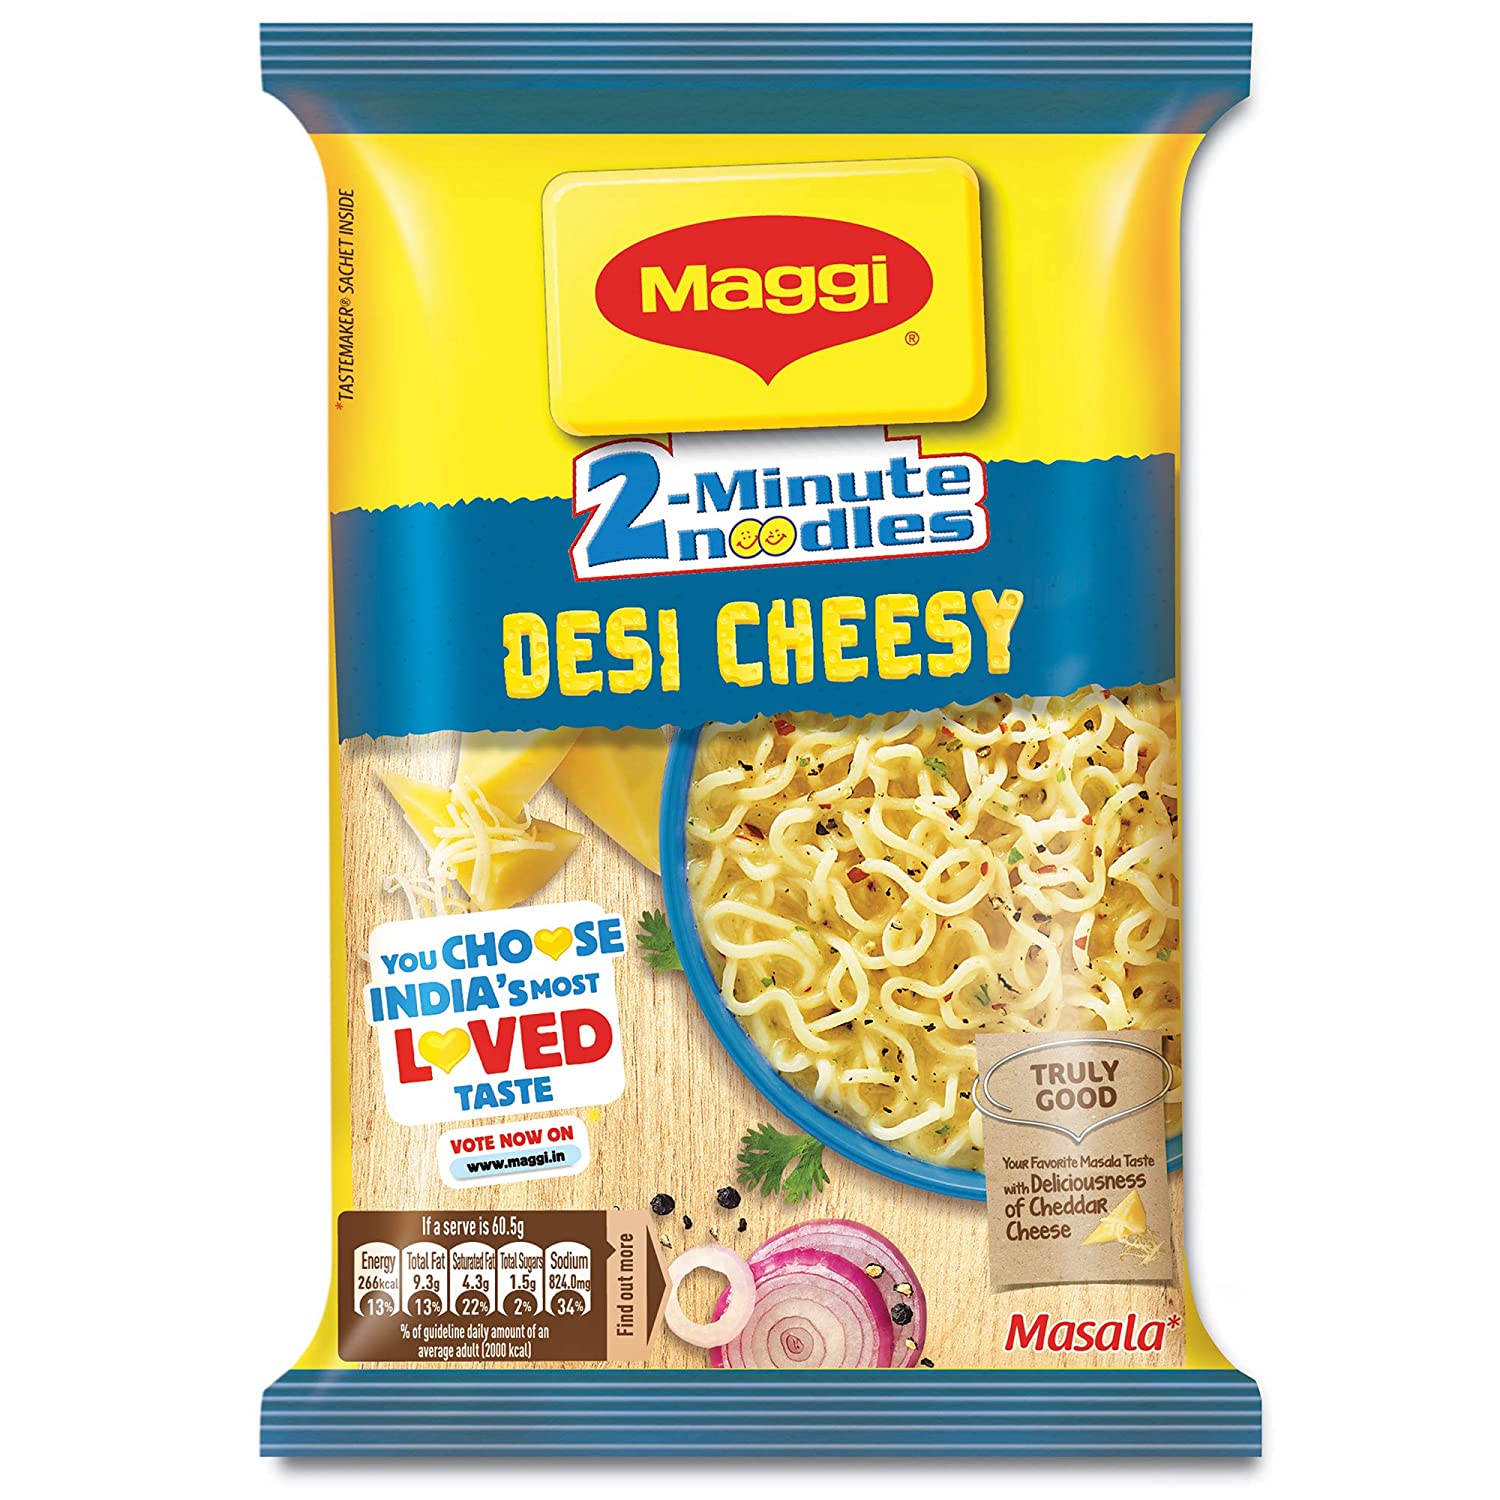 Maggi 2-Minute Instant Noodles, Desi Cheesy Masala Pouch. (60.50gm)